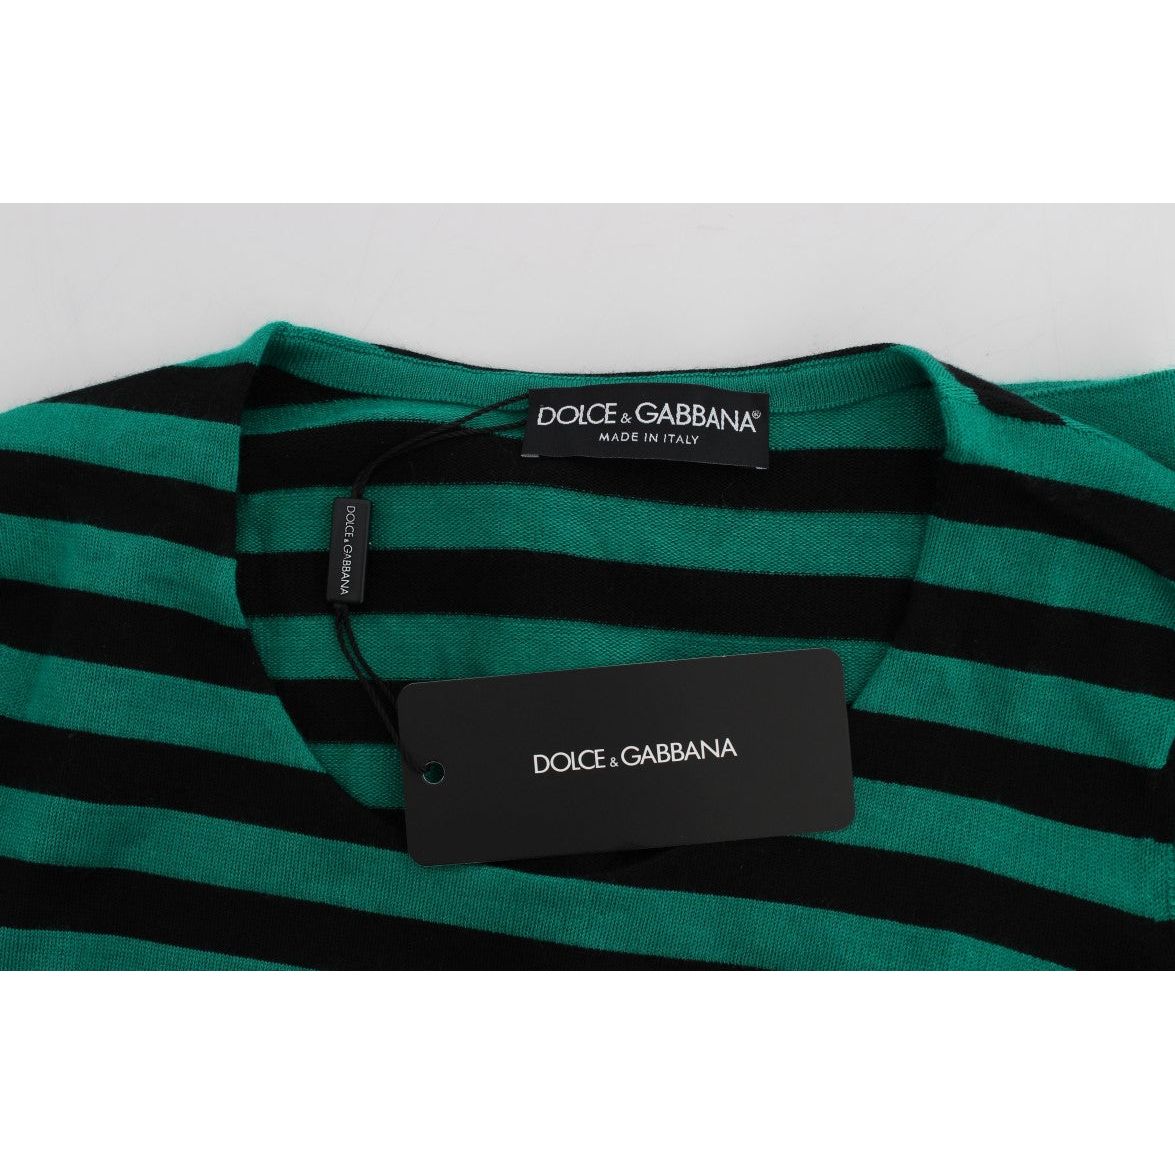 Dolce & Gabbana Elegant Striped Cashmere Silk Sweater green-black-silk-cashmere-sweater 178844-green-black-silk-cashmere-sweater-4.jpg